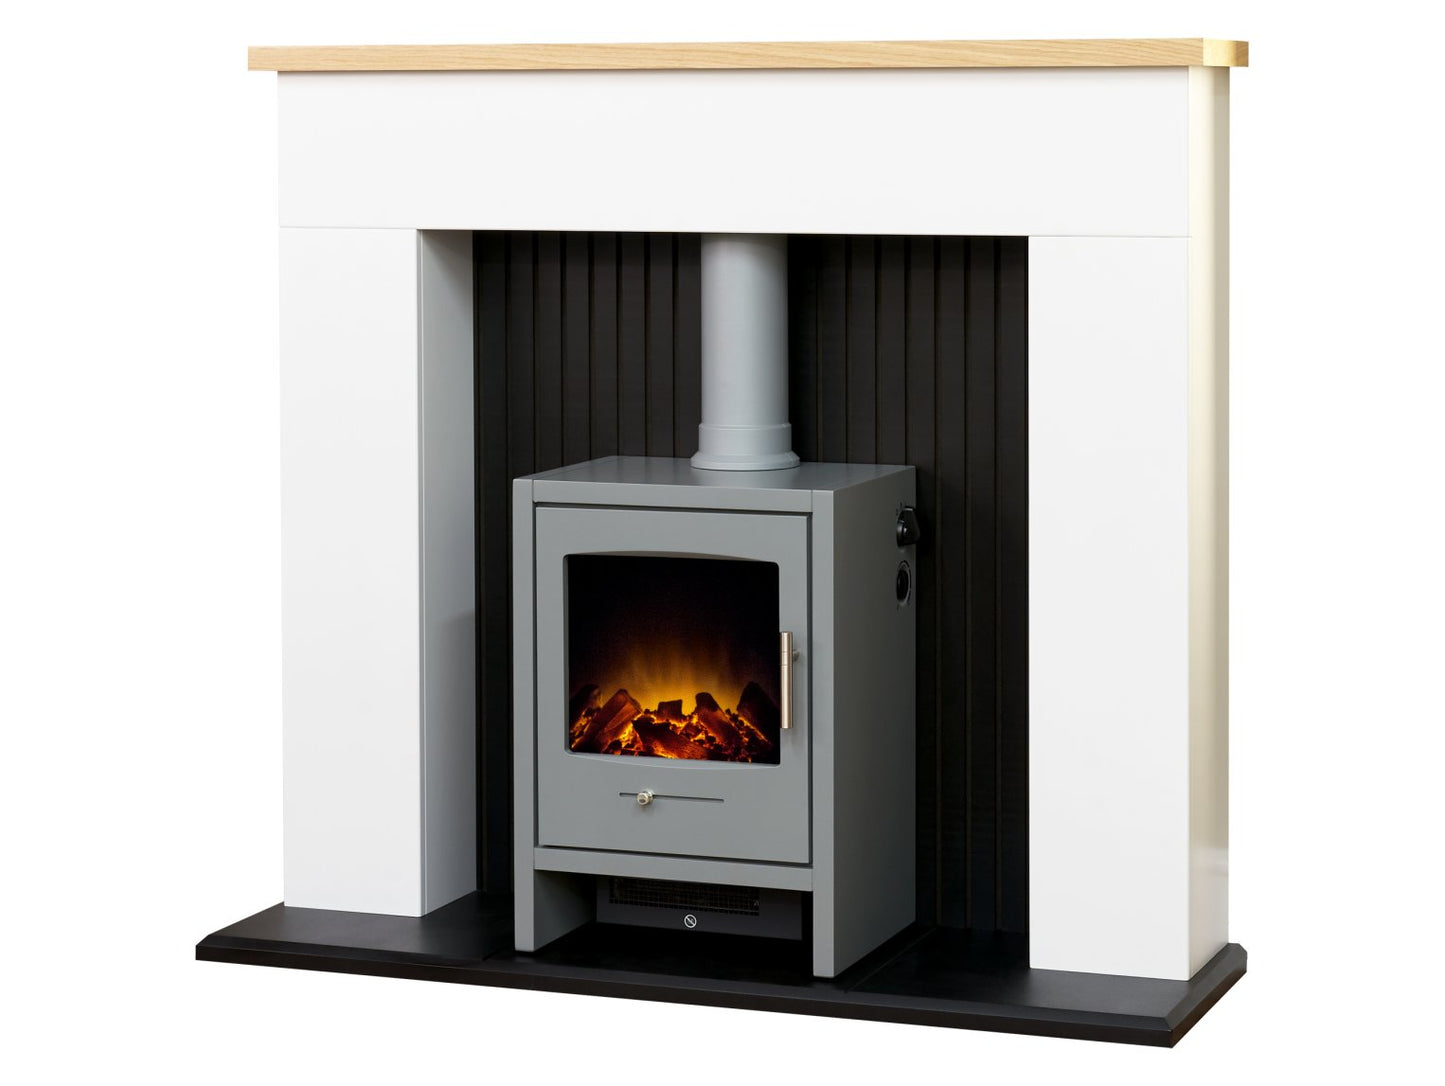 Adam Innsbruck Stove Fireplace Pure White + Bergen Electric Stove Grey, 48"